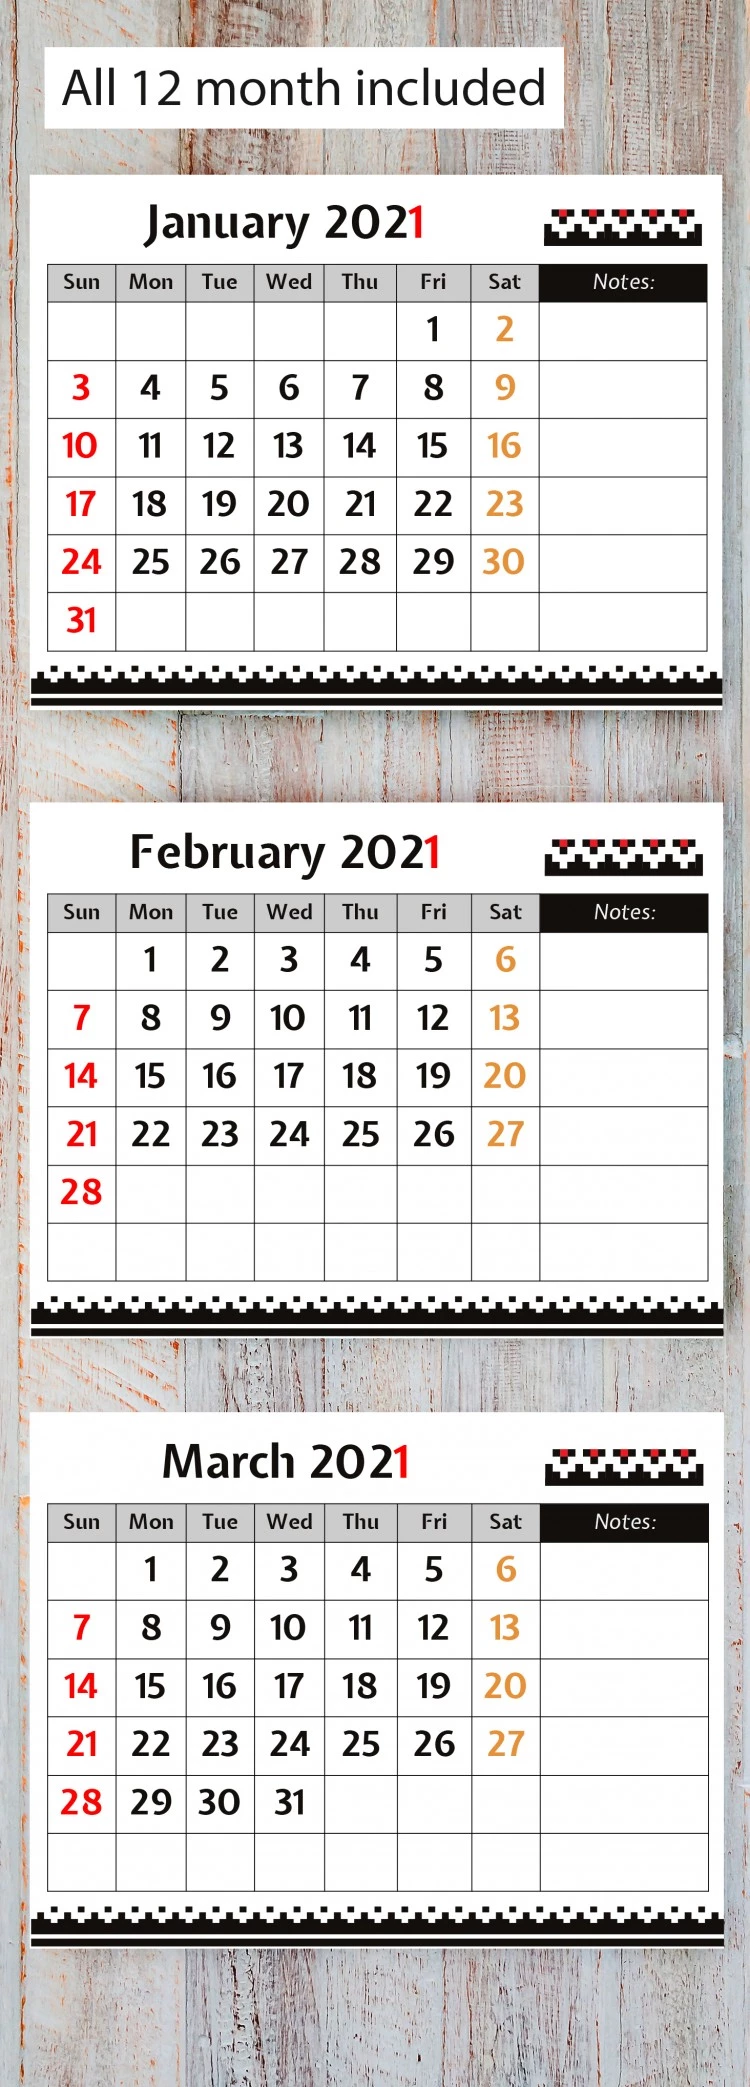 Special Monthly Calendar 2021 - free Google Docs Template - 10061806